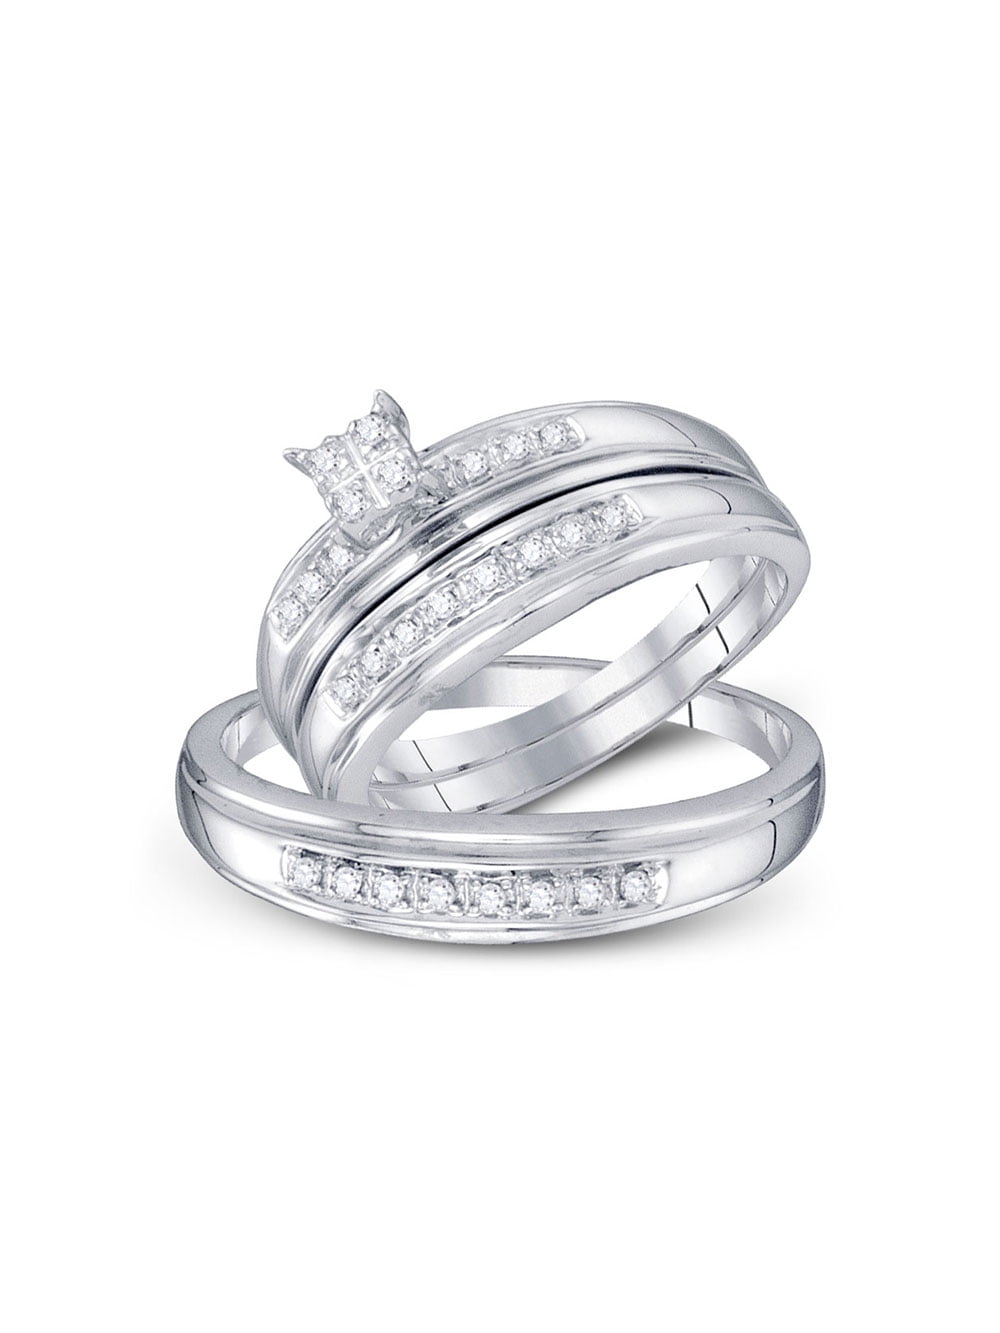 Details about   2.00 Ct VVS1 Diamond 14K White Gold Over Wedding Band Ring Engagement Bridal Set 